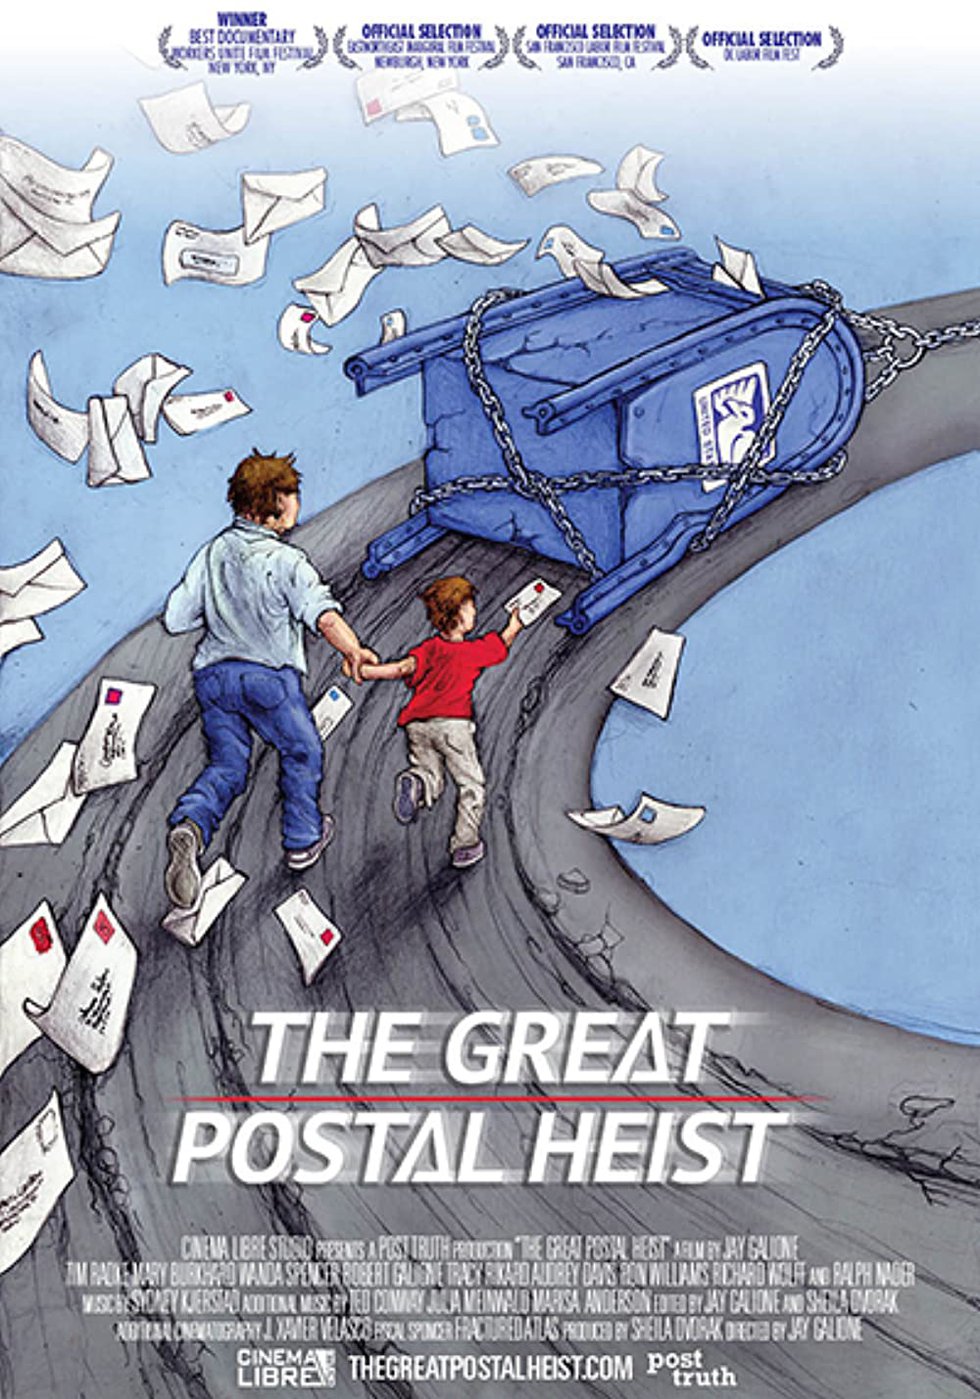 The Great Postal Heist Documentary.jpg